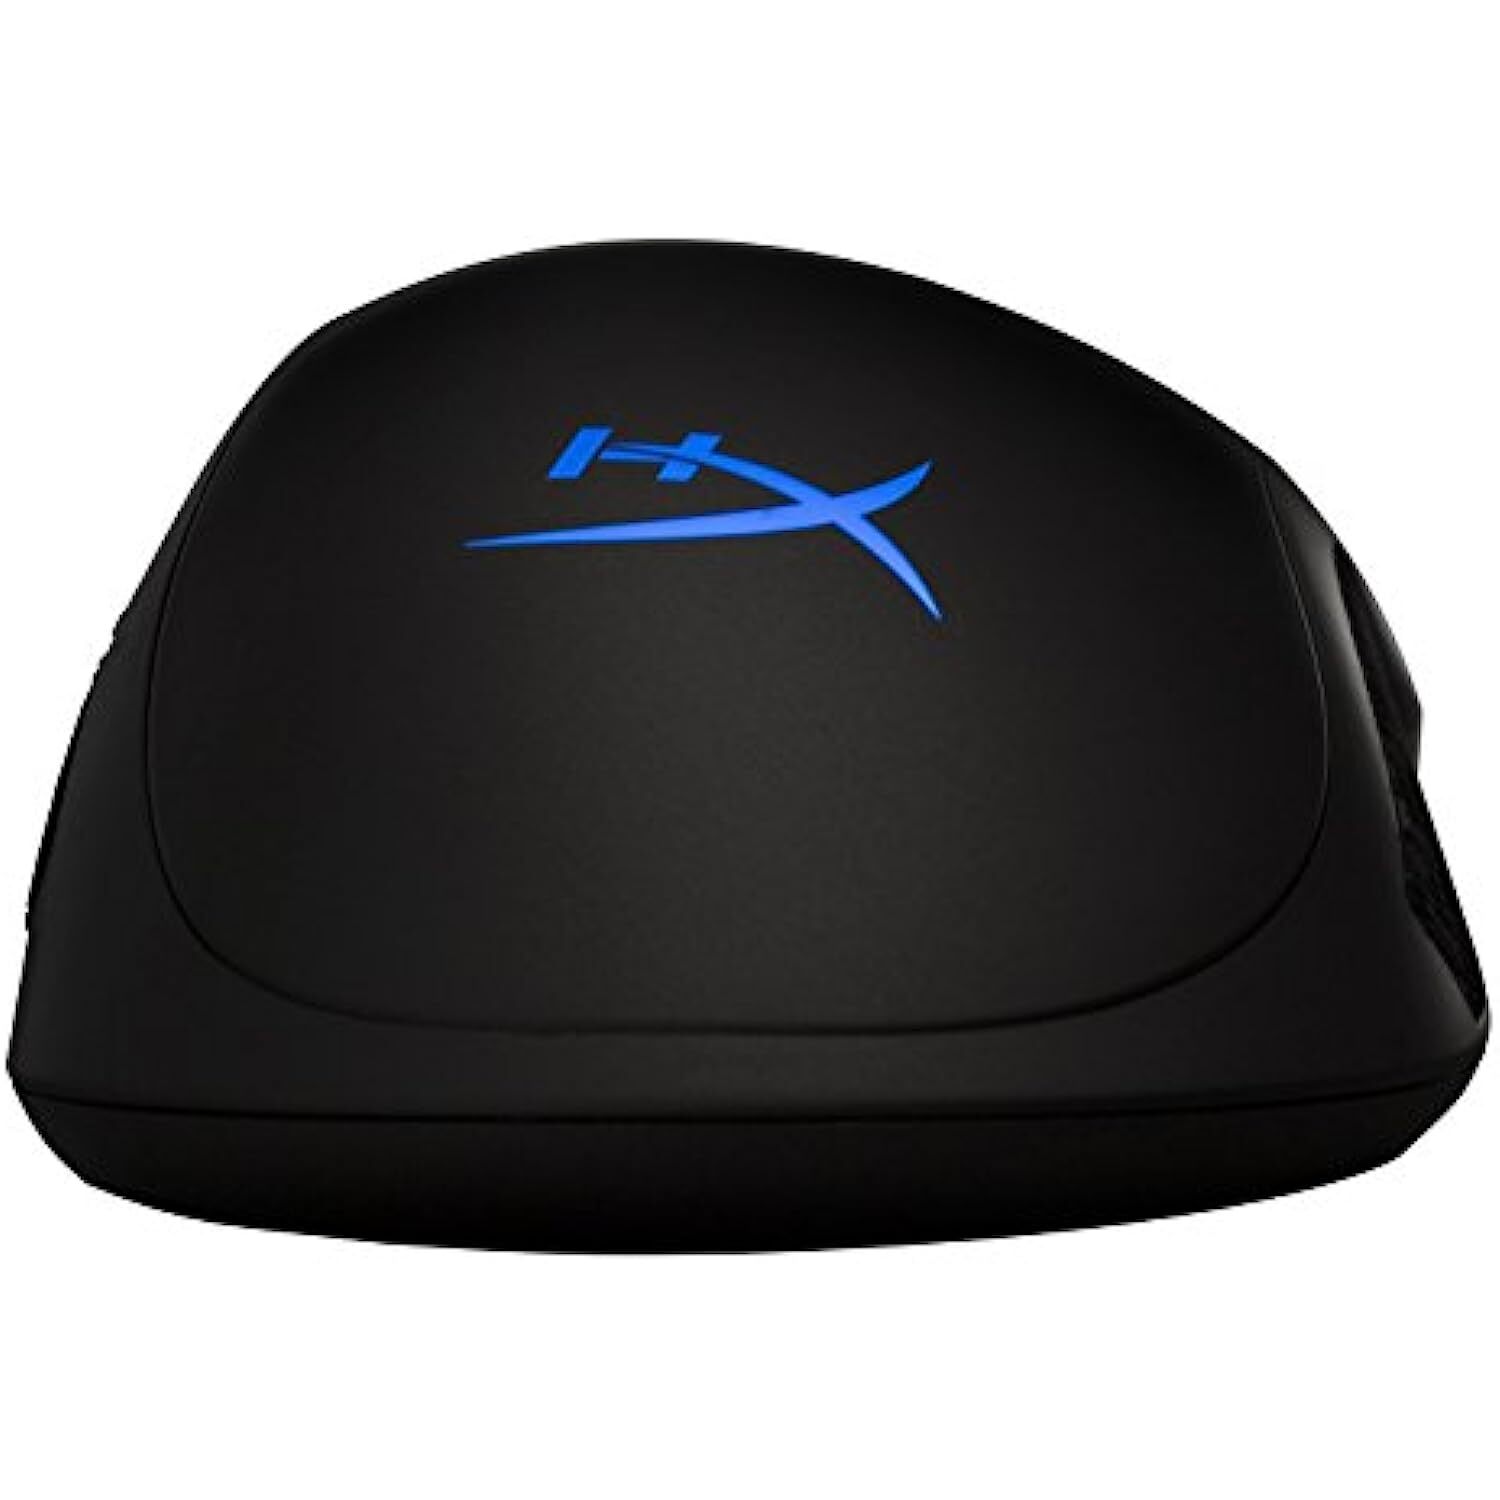 HyperX Pulsefire FPS Pro USB Gaming Mouse, Software Controlled RGB Light Effects & Macro Customization, Pixart 3389 Sensor Up to 16,000 DPI, 6 Programmable Buttons - Black (HX-MC003B)